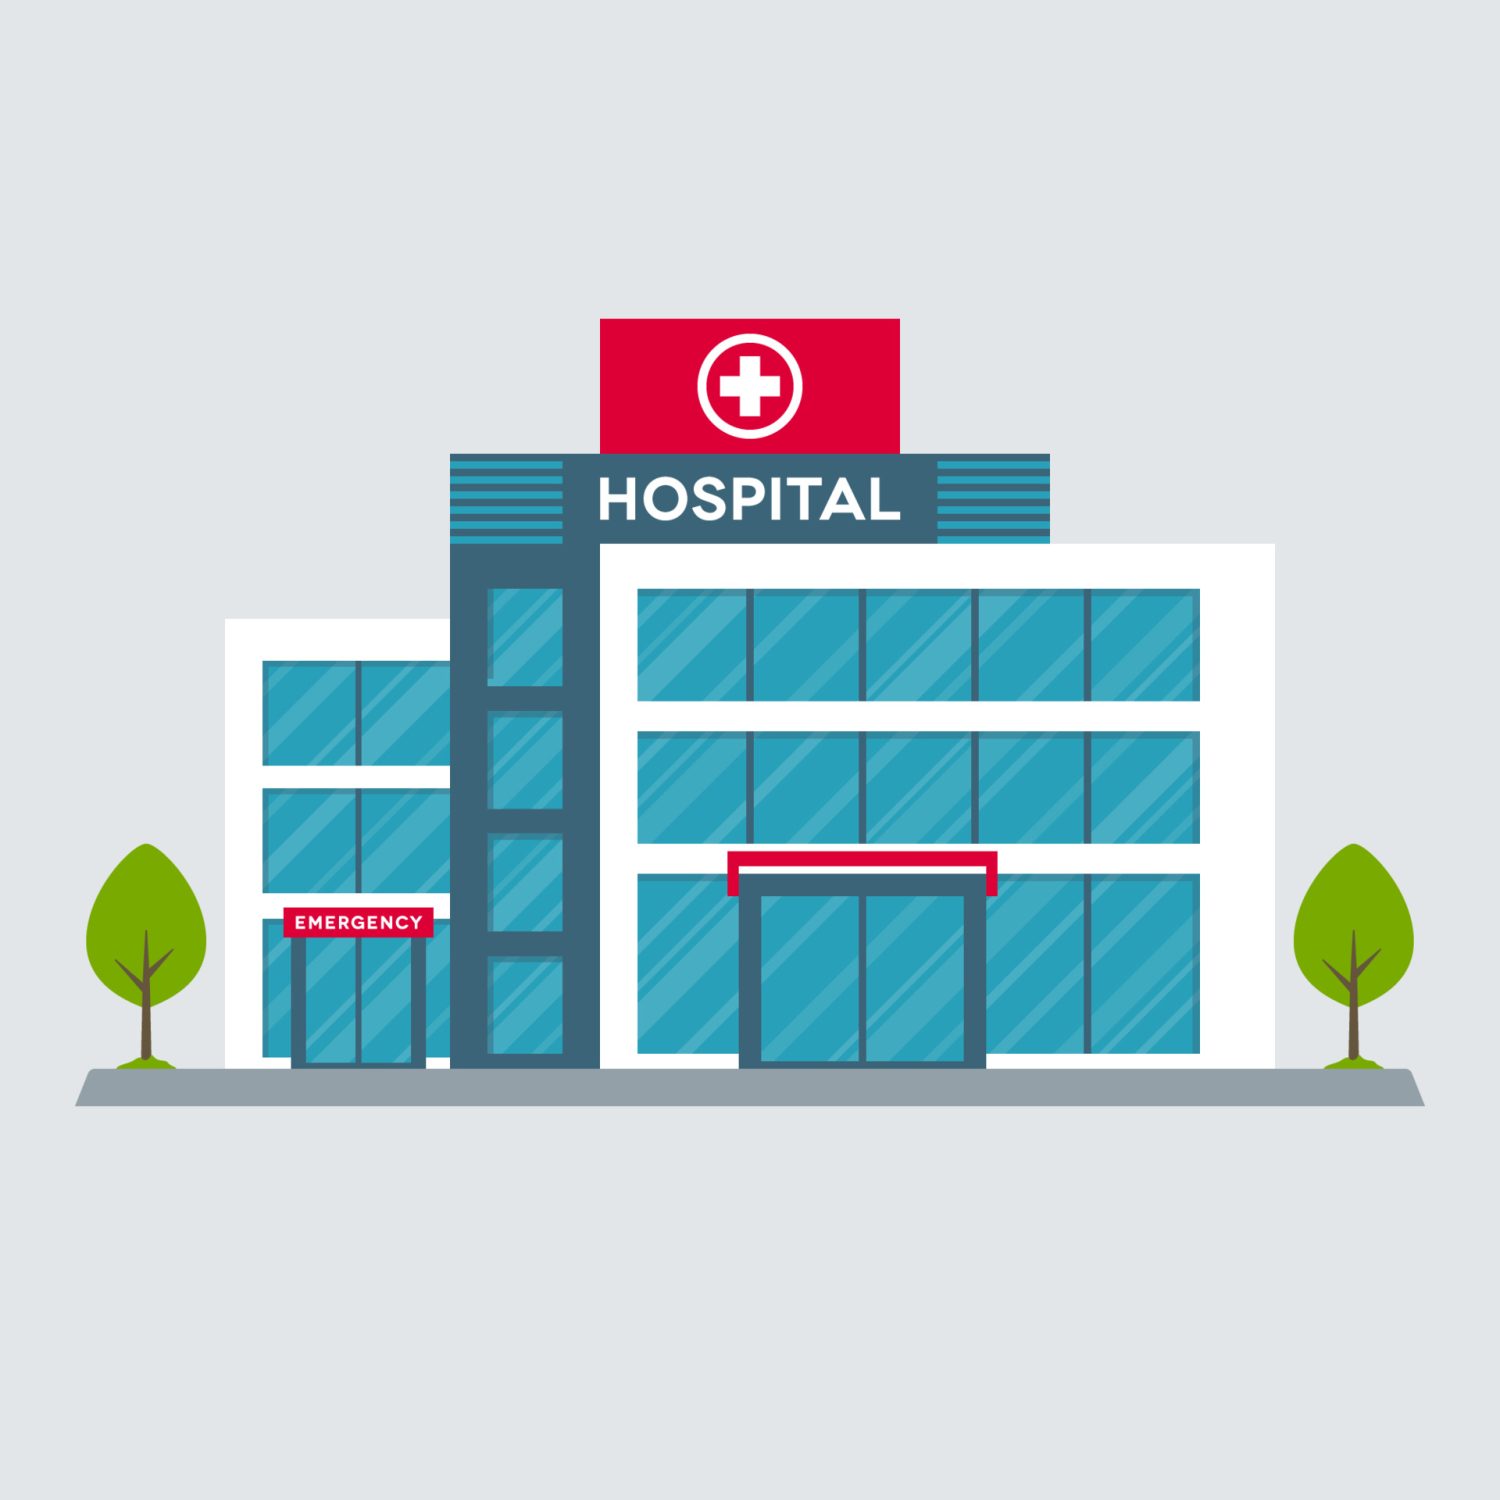 Illustration of hospital